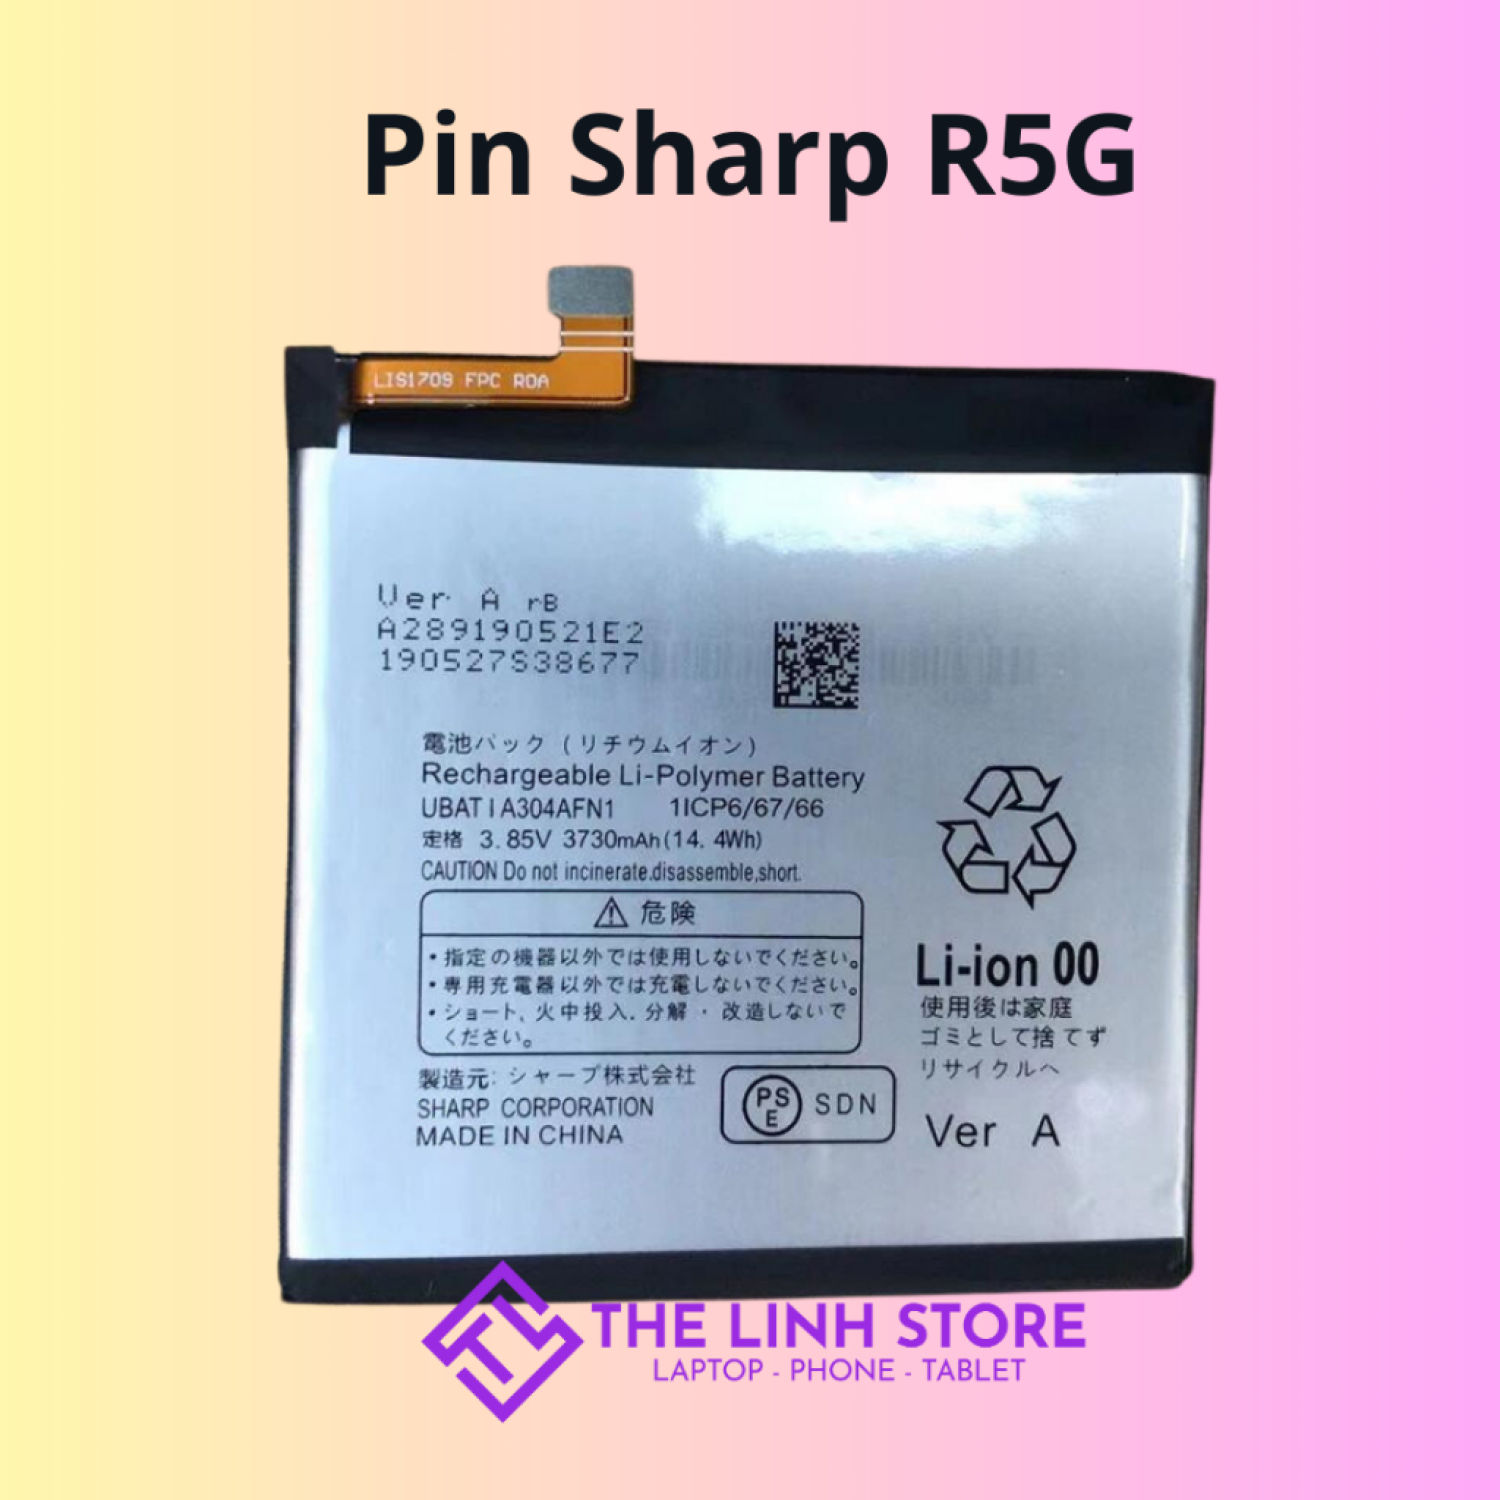 Pin Sharp Aquos R5G 3730mAh – Mã UBATIA304AFN1